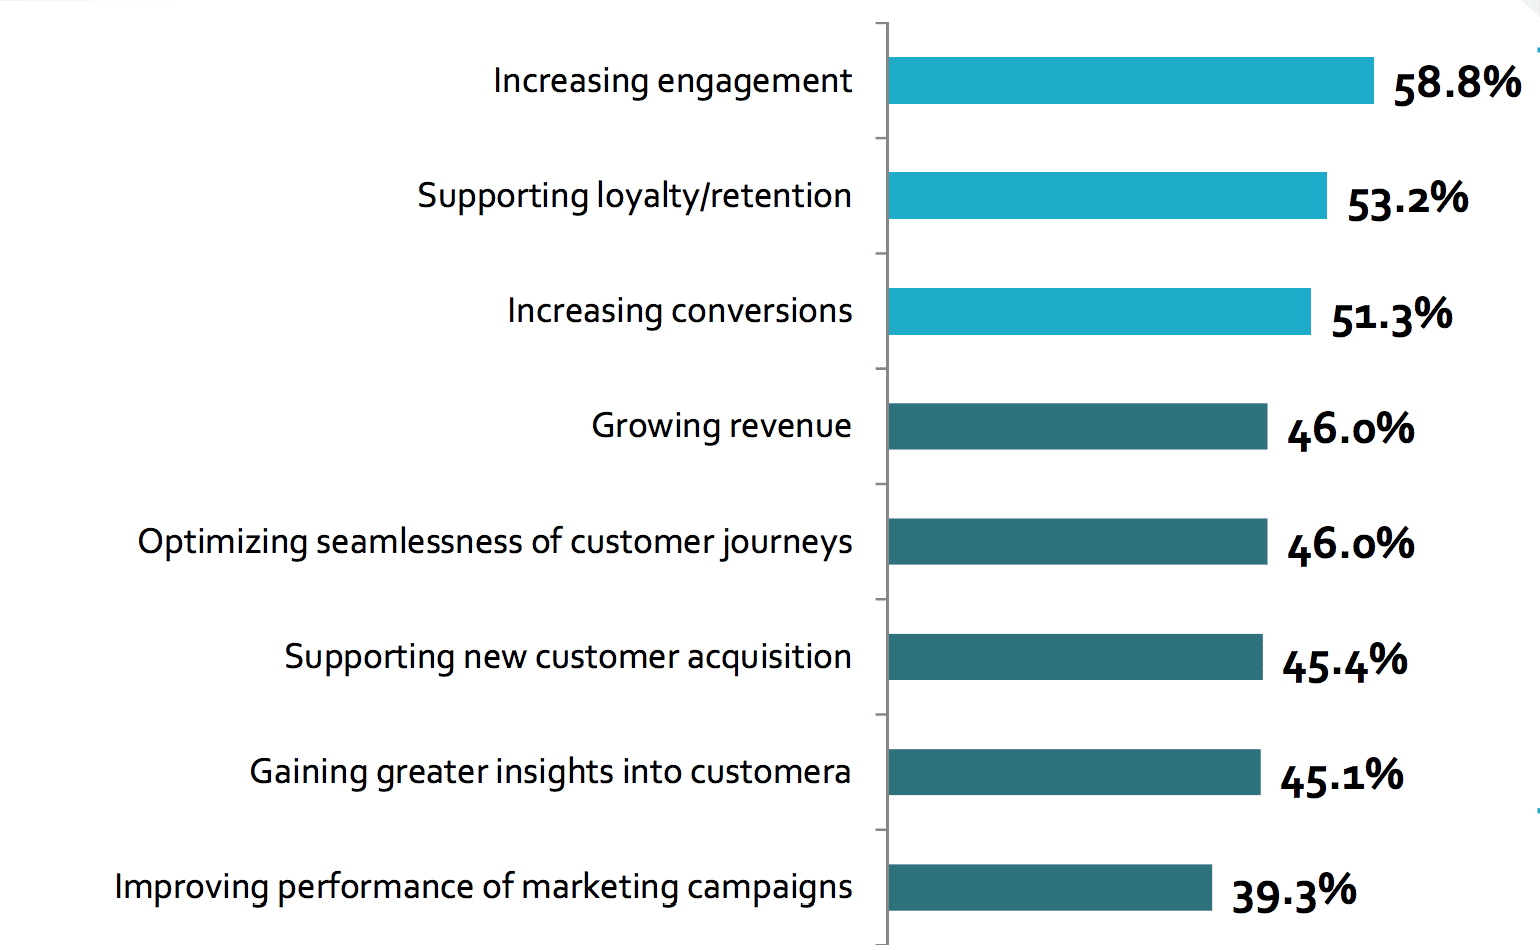 Customer Experience Chart